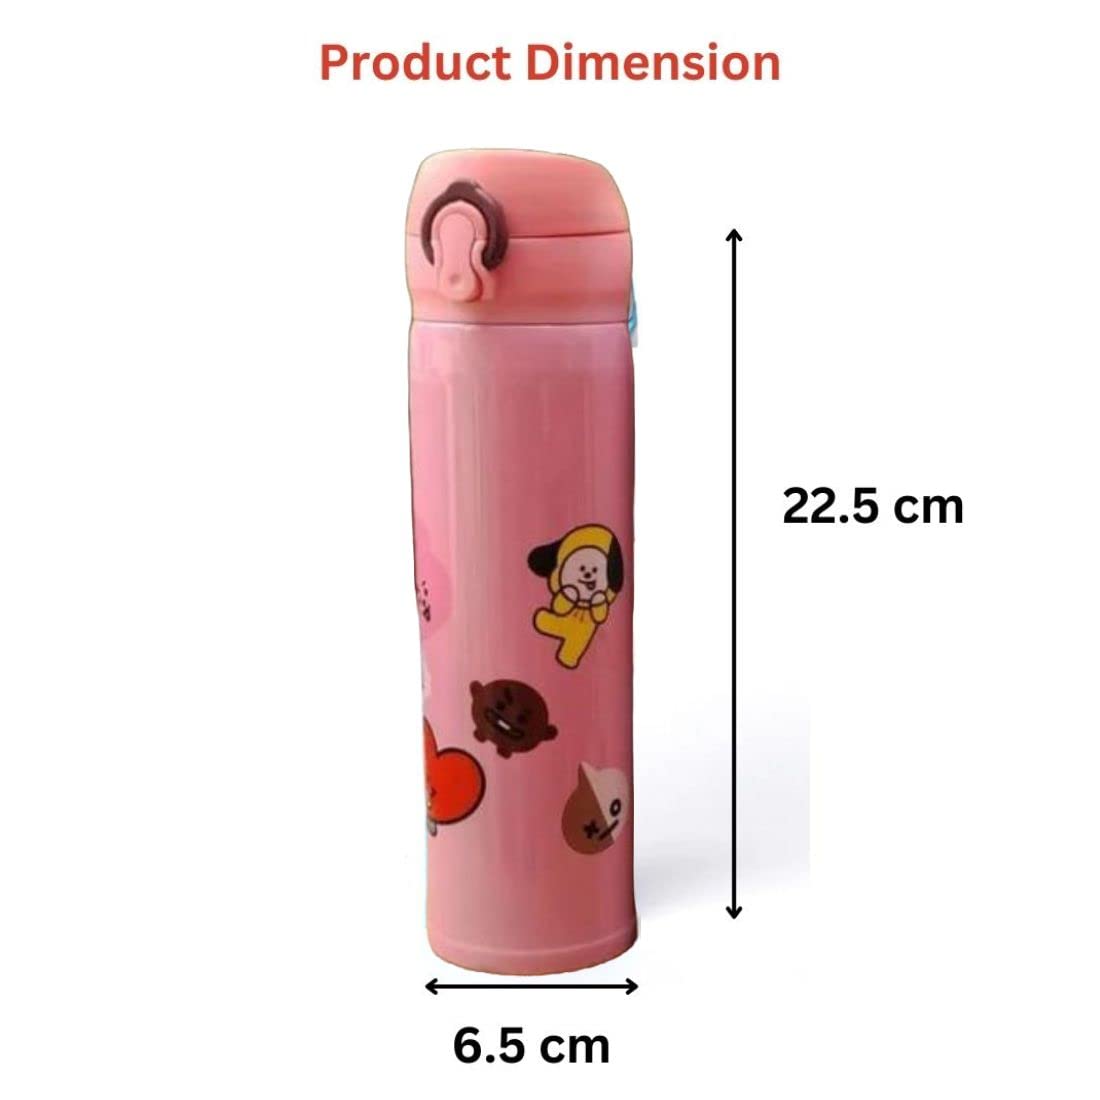 BTS Theme Multicolor Stainless Steel Water Bottle Vacuum Flask Leak-Proof Bottle for School Kids Girls Adults Travel Gym Water Bottle (500 ML)- 1 Unit (Pink)